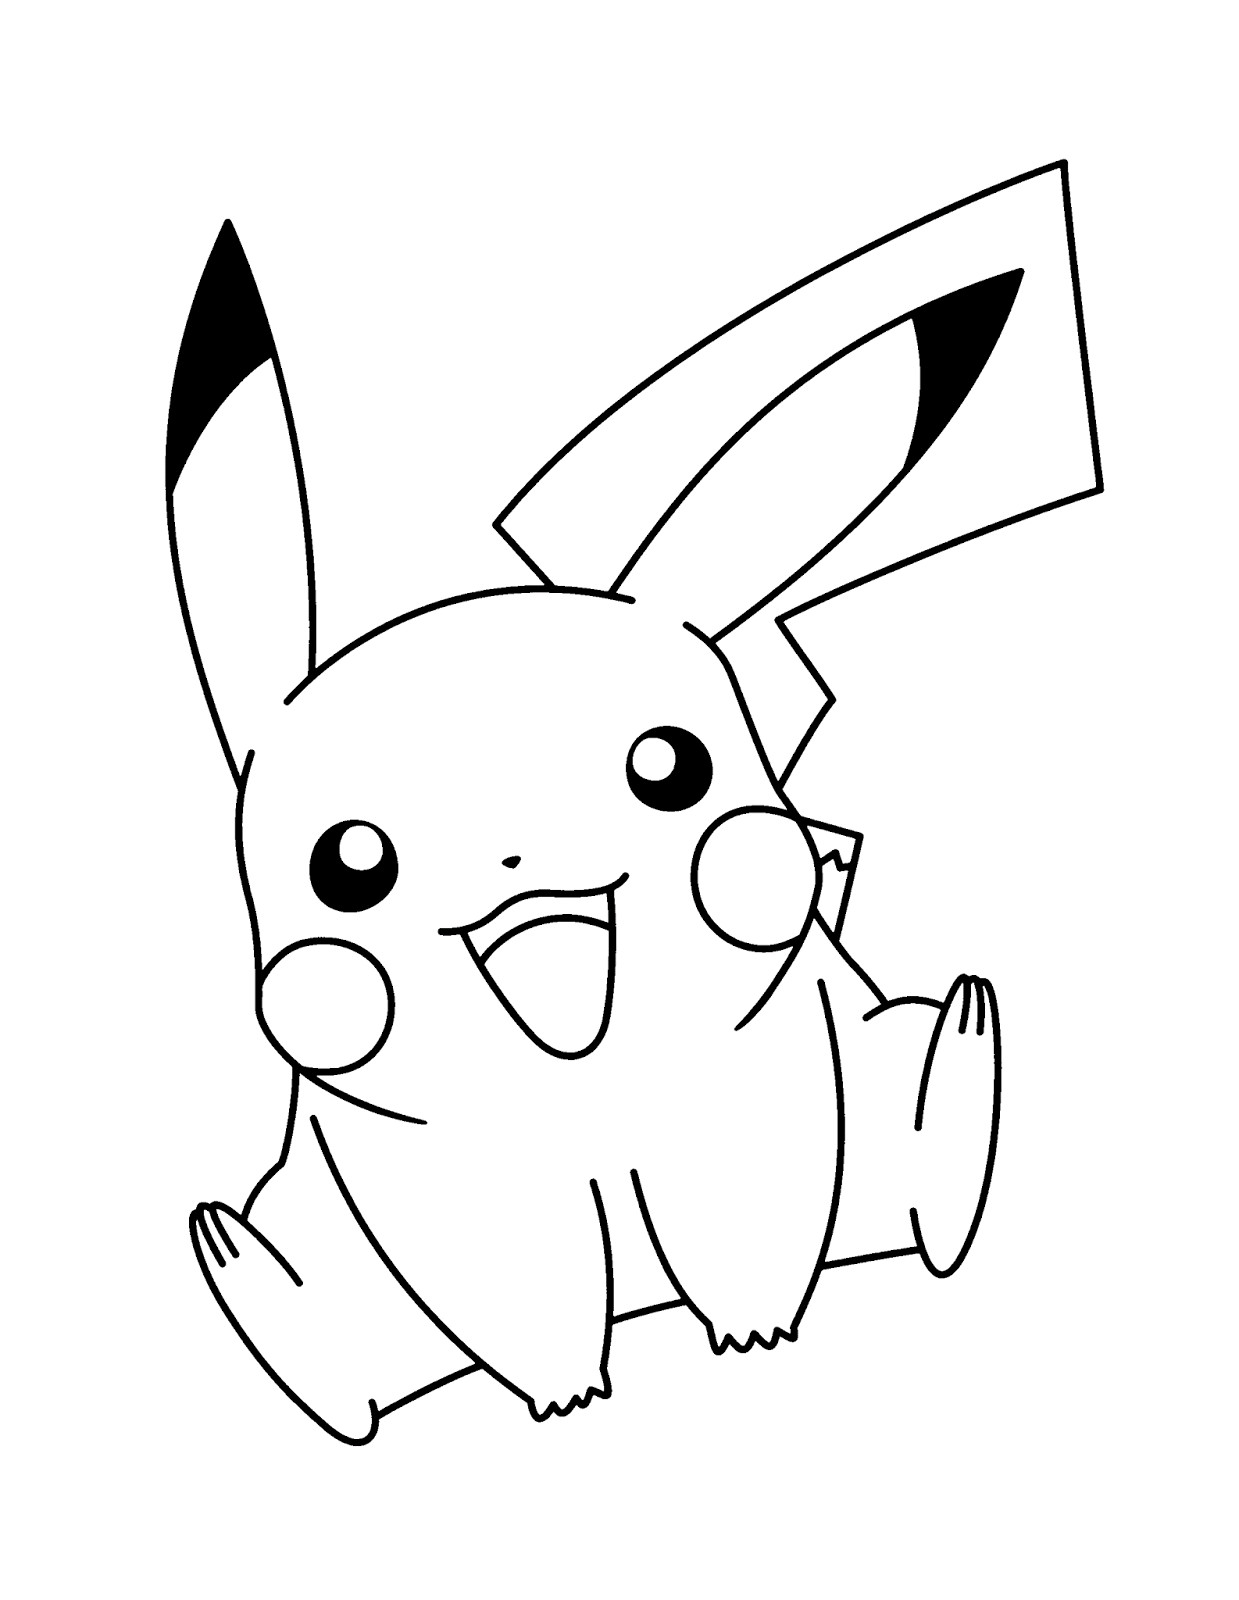 Pokemon Ausmalbilder Pikachu
 PIKACHU AUSMALBILD Malvorlage Gratis